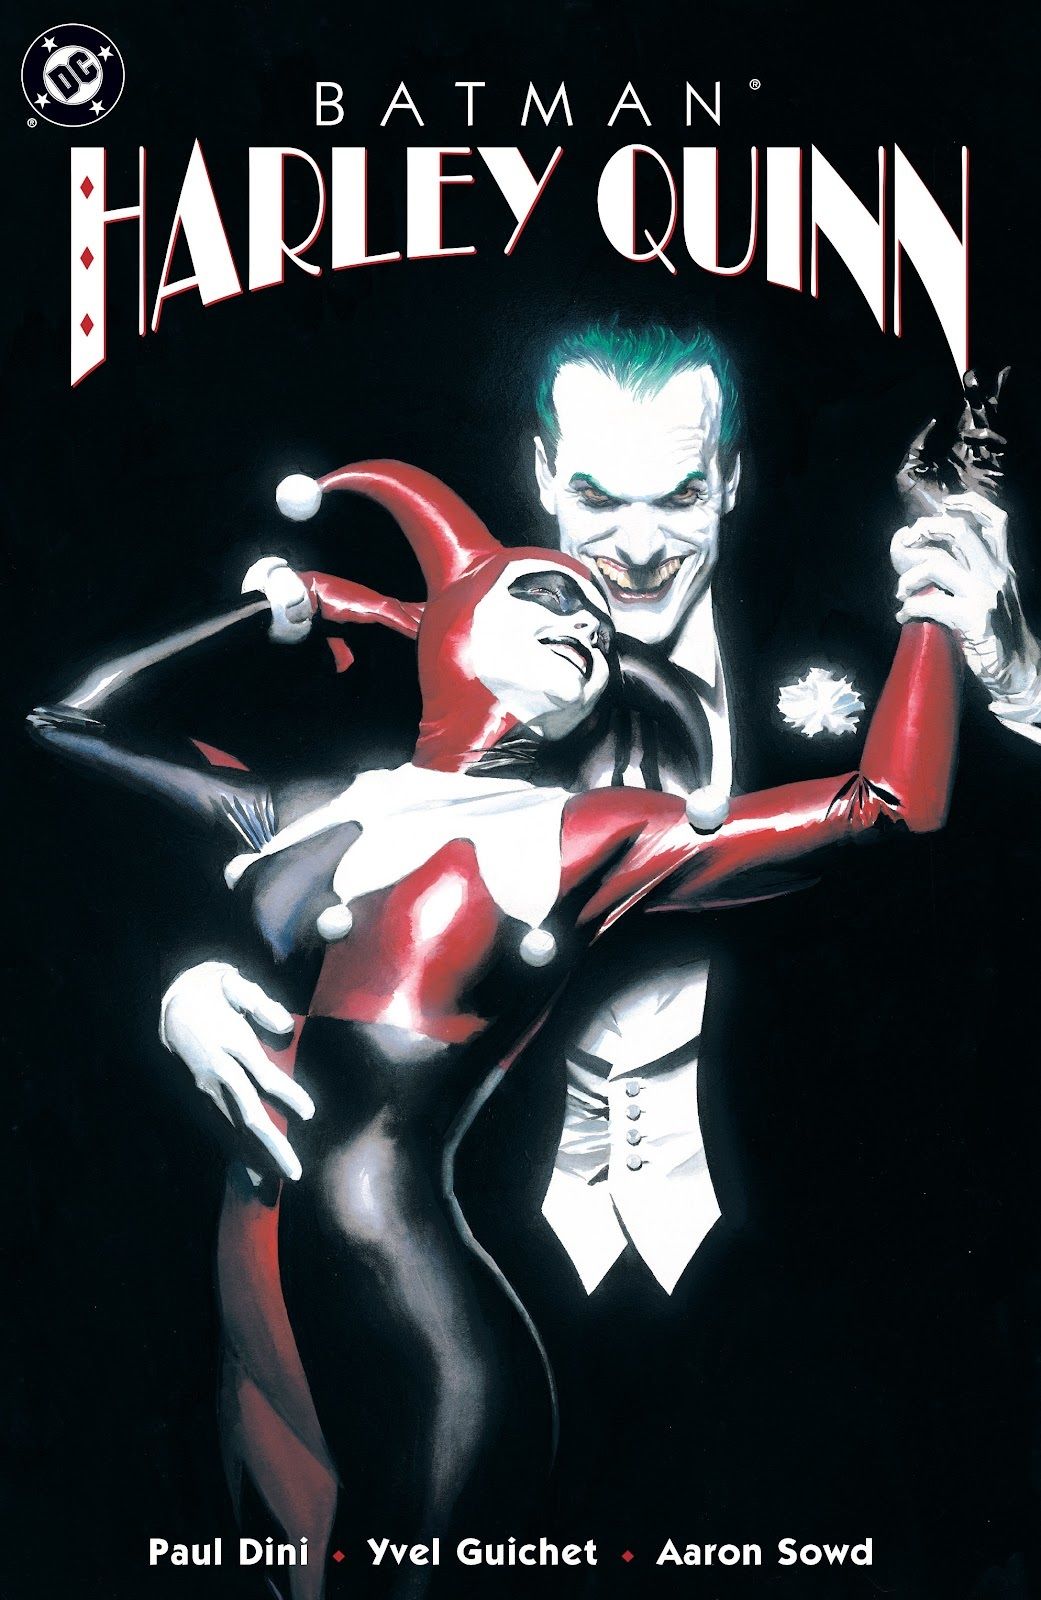 The cover of Batman: Harley Quinn #1